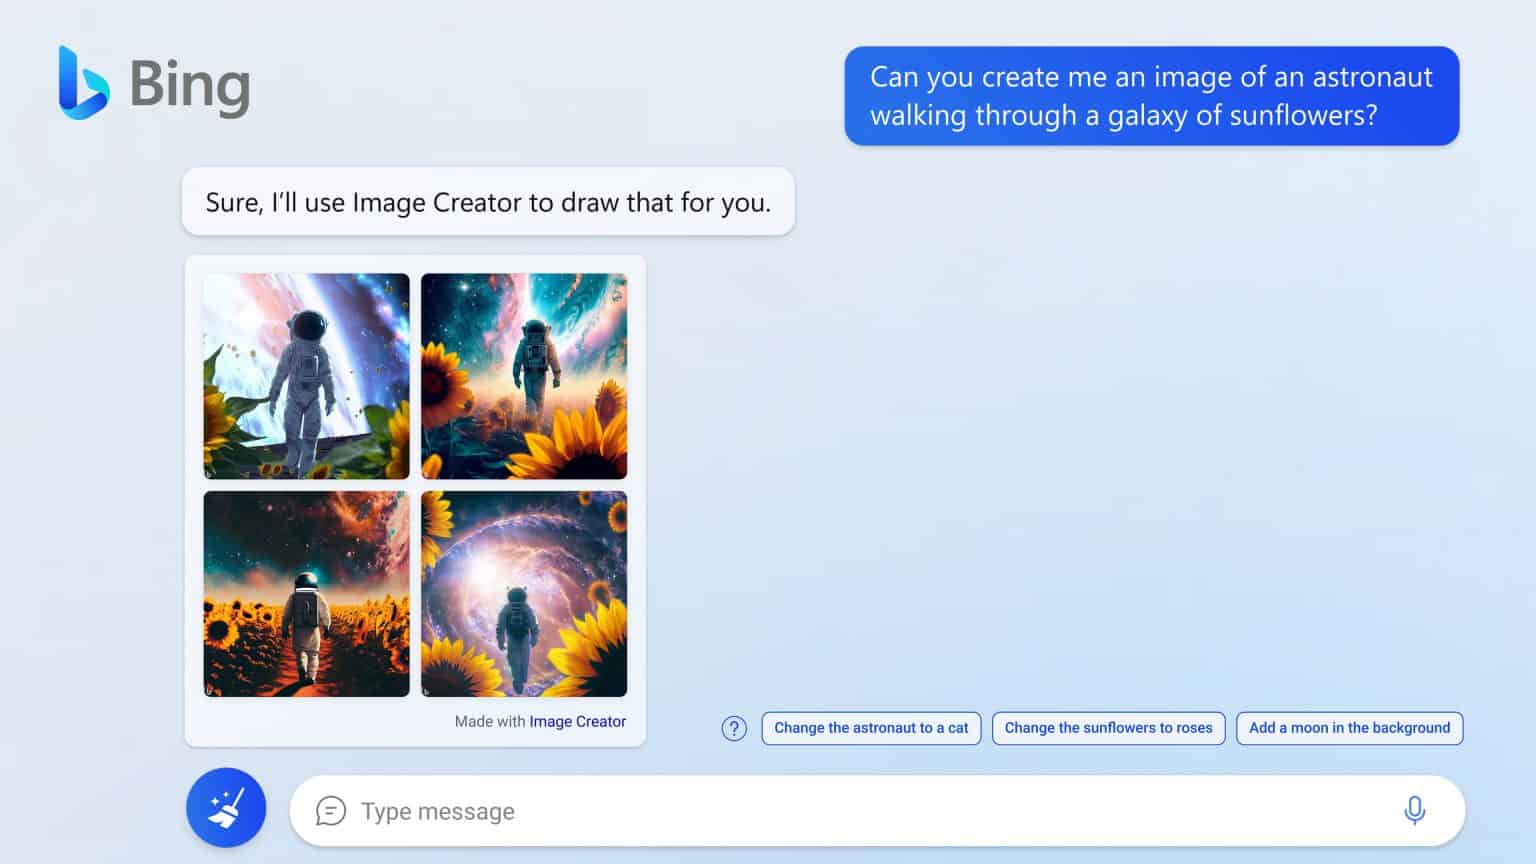 Microsoft starts Edge Image Creator sidebar icon rollout globally